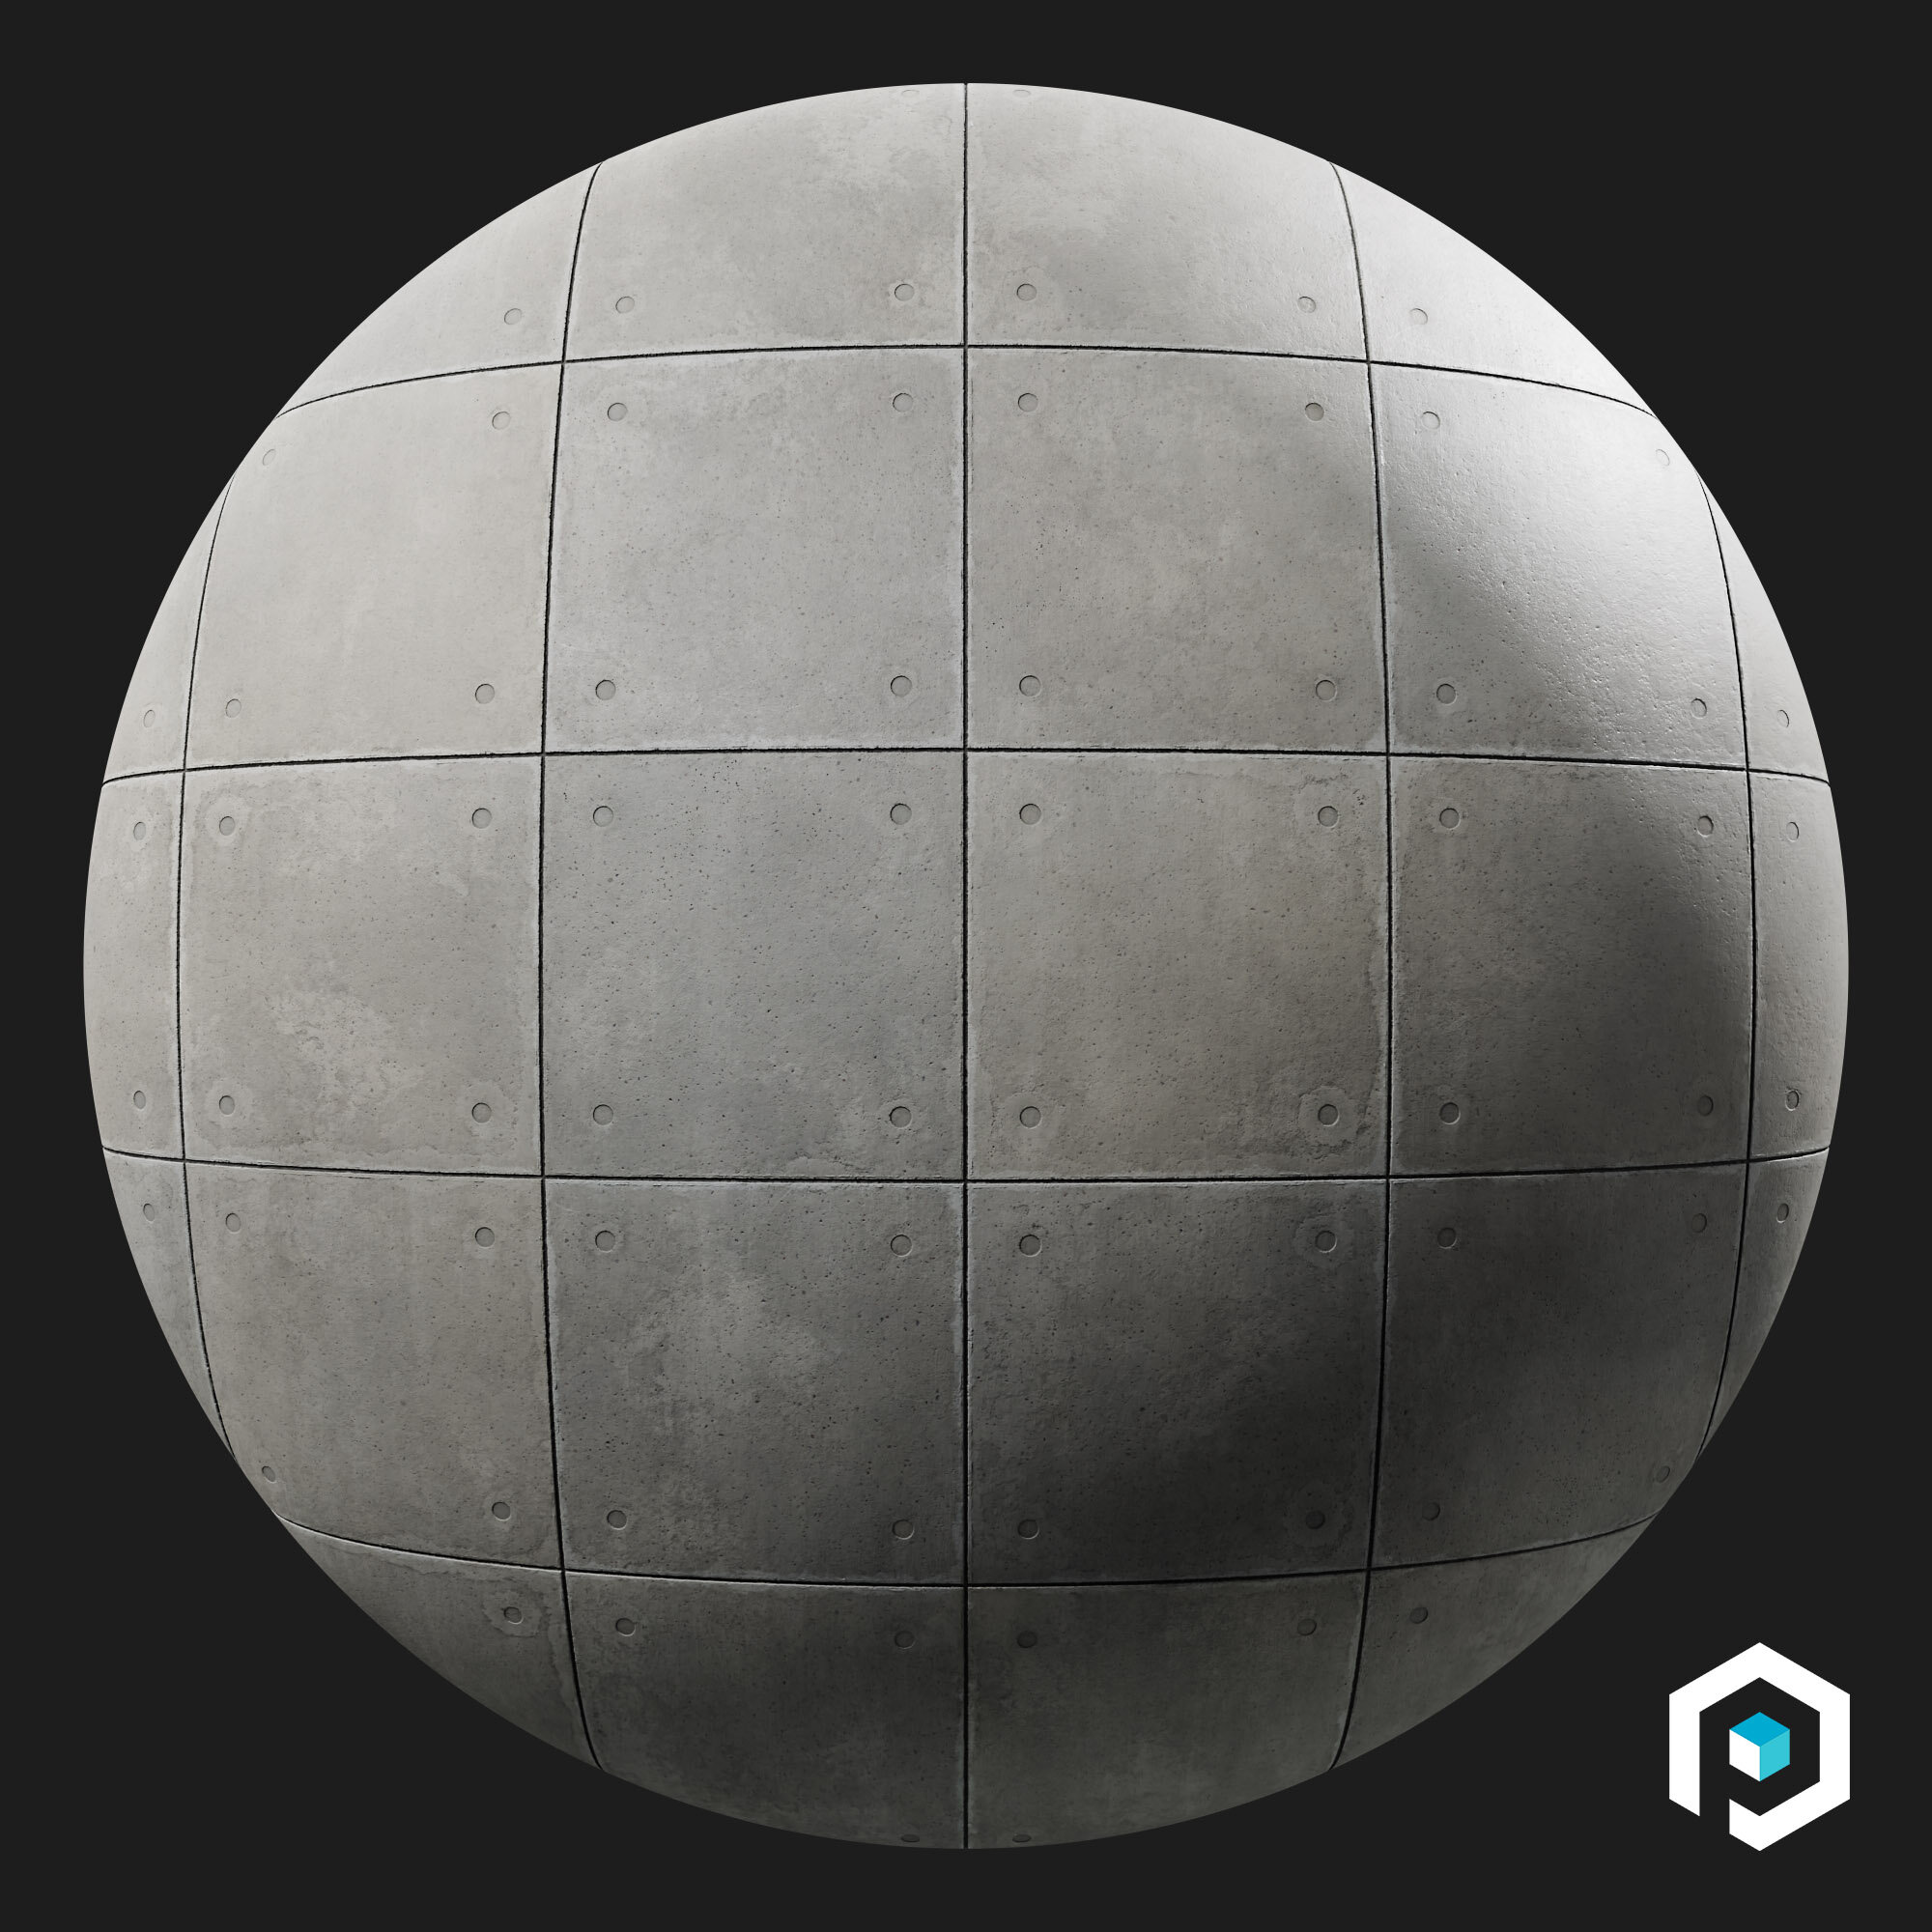 ConcretePanelsSquare001_Sphere.jpg